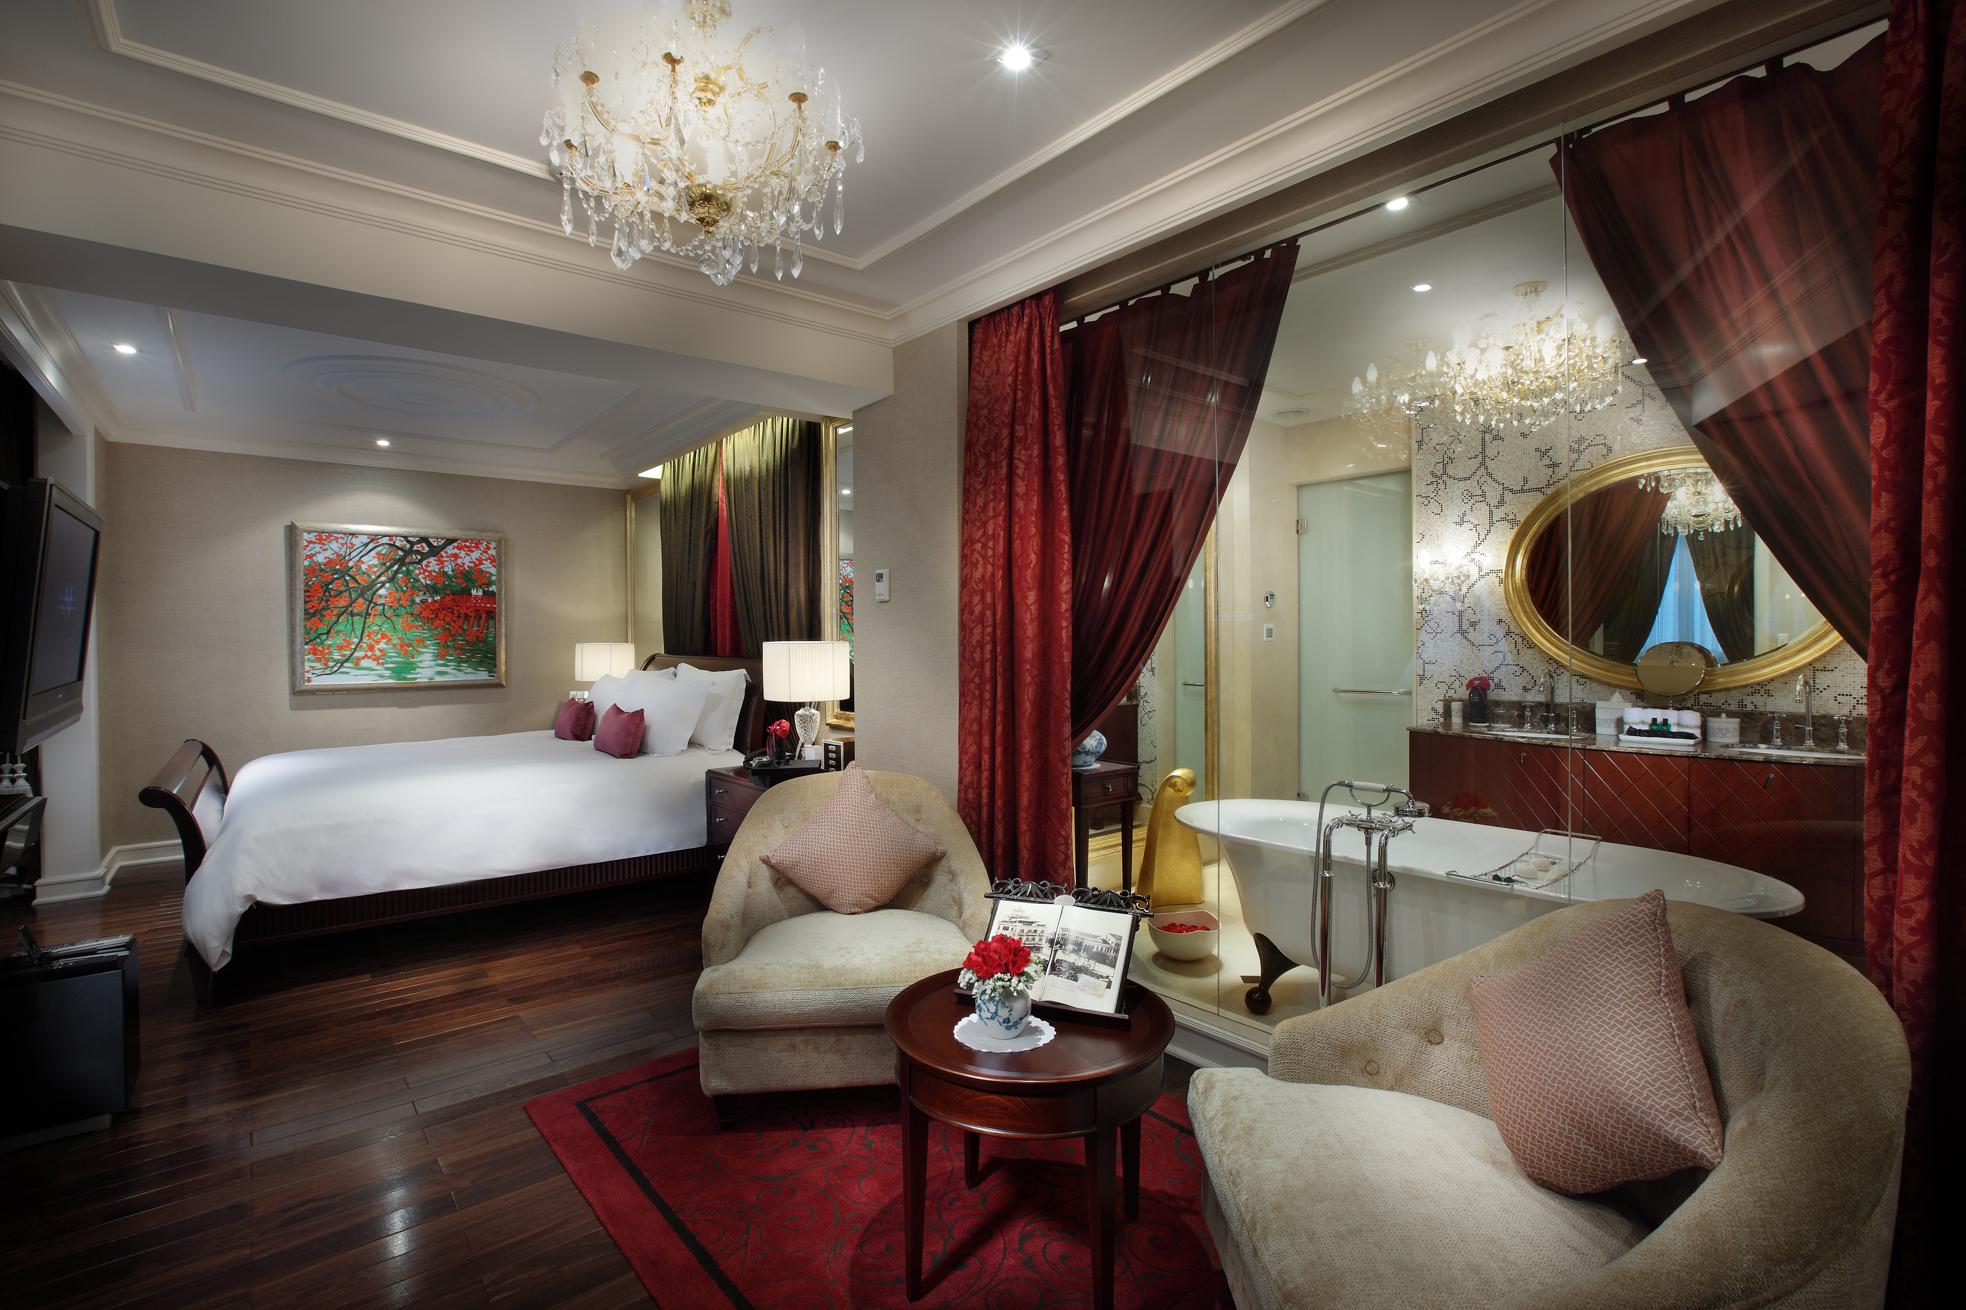 A room at the Sofitel Legend Metropole Hanoi